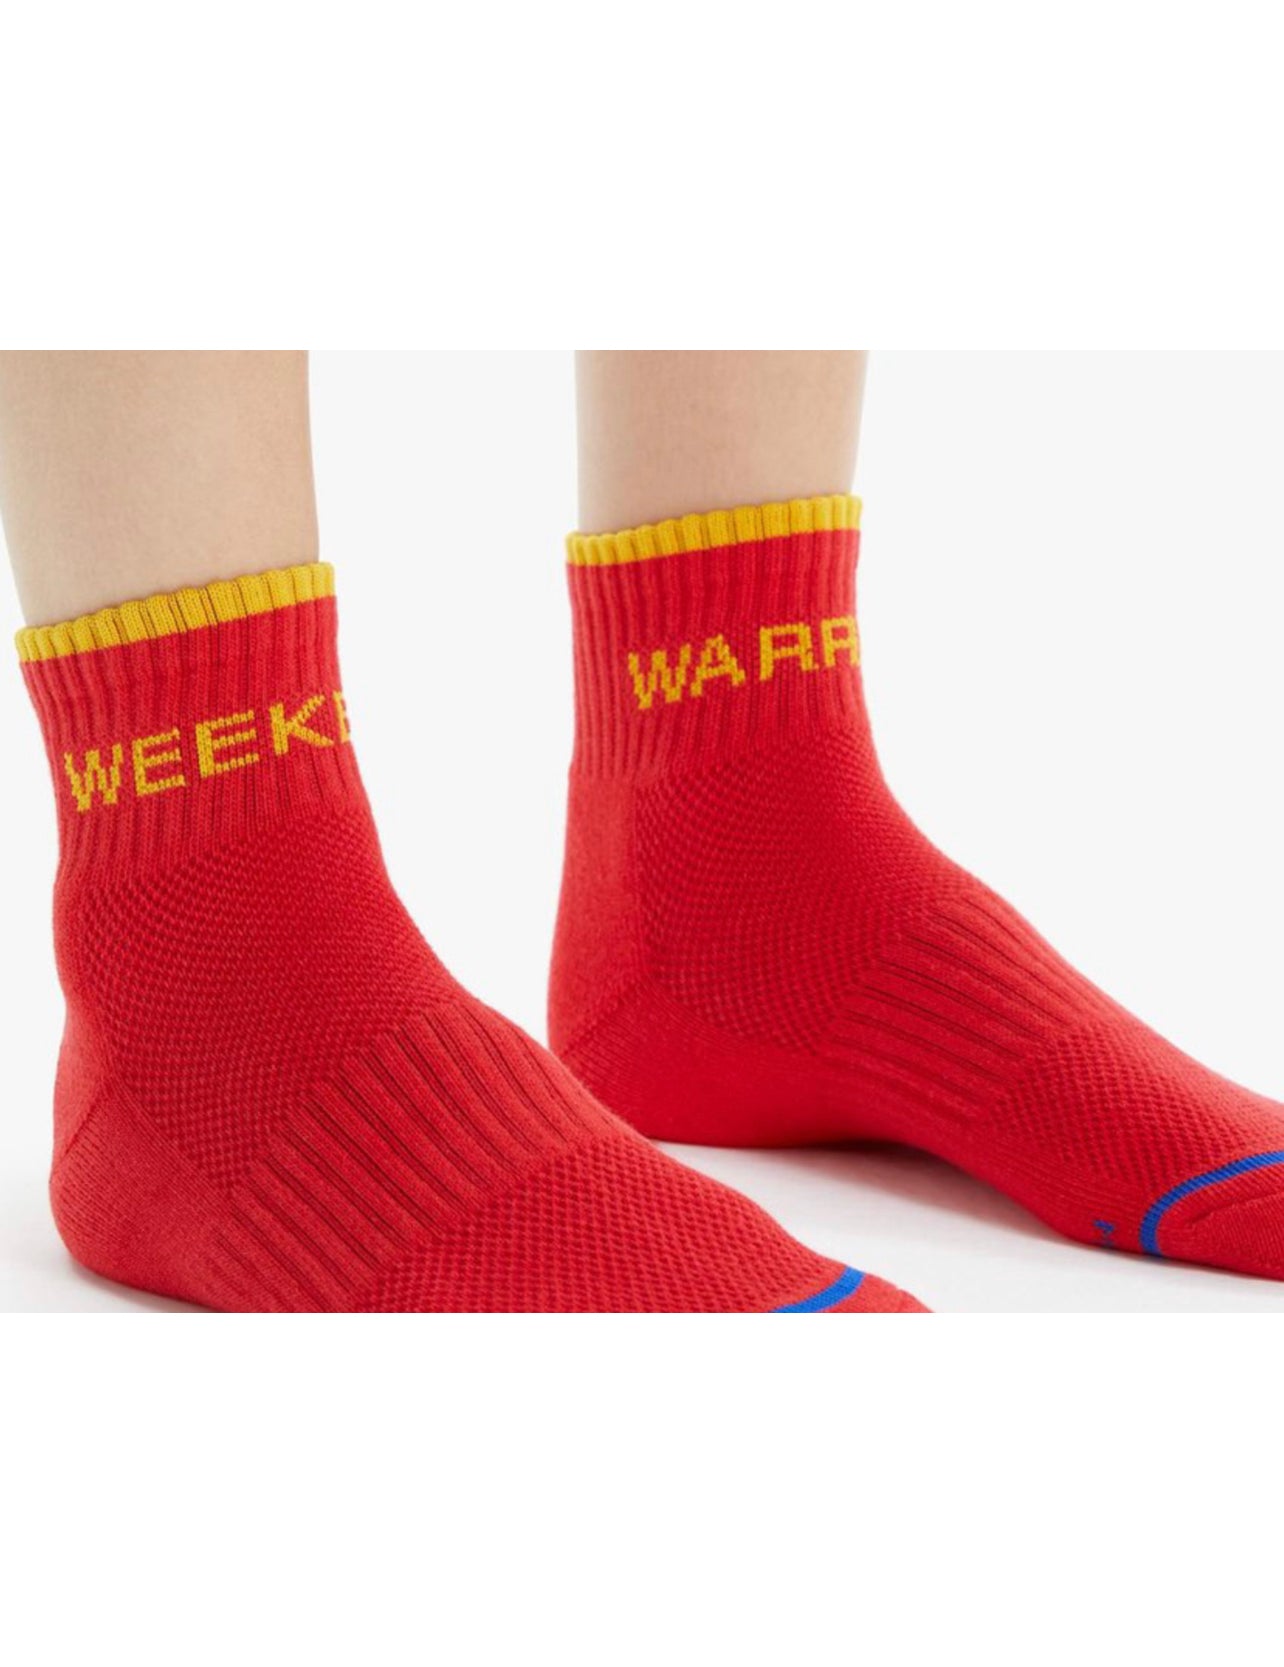 Mother "Weekend Warrior" Socks